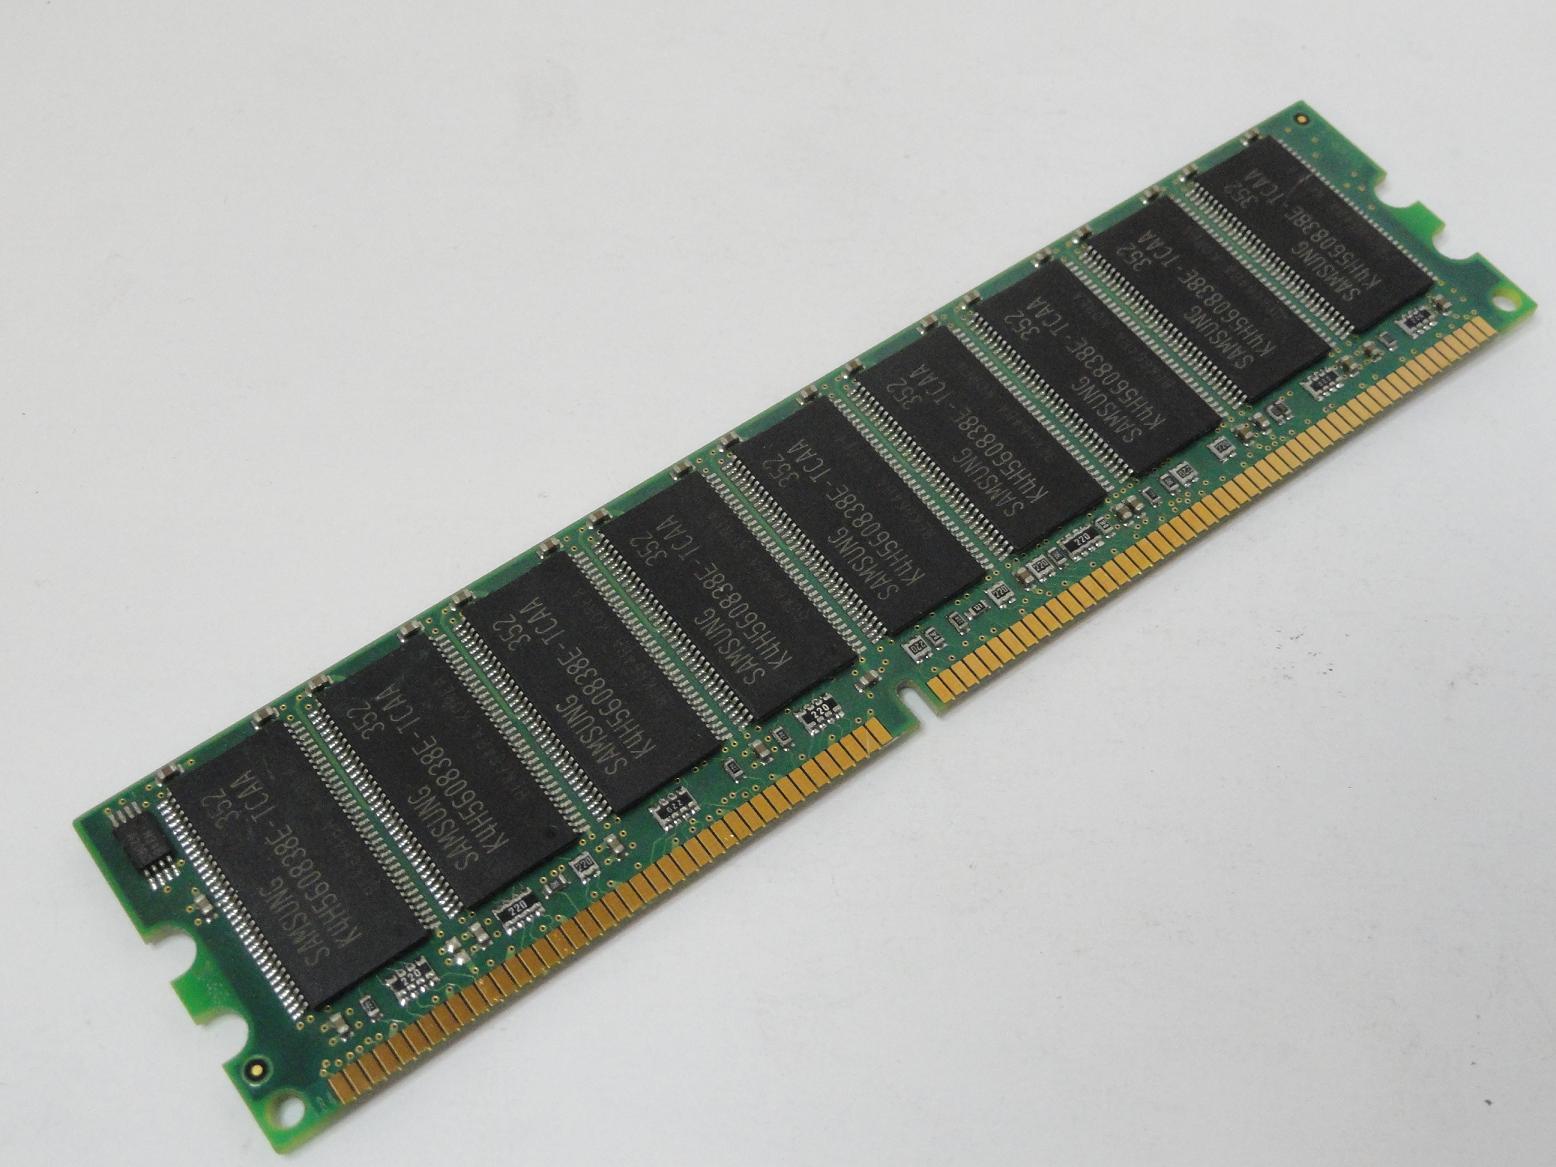 PR25360_PC2100U-20221-B2_Samsung 512MB PC2100 DDR-266MHz DIMM RAM - Image2